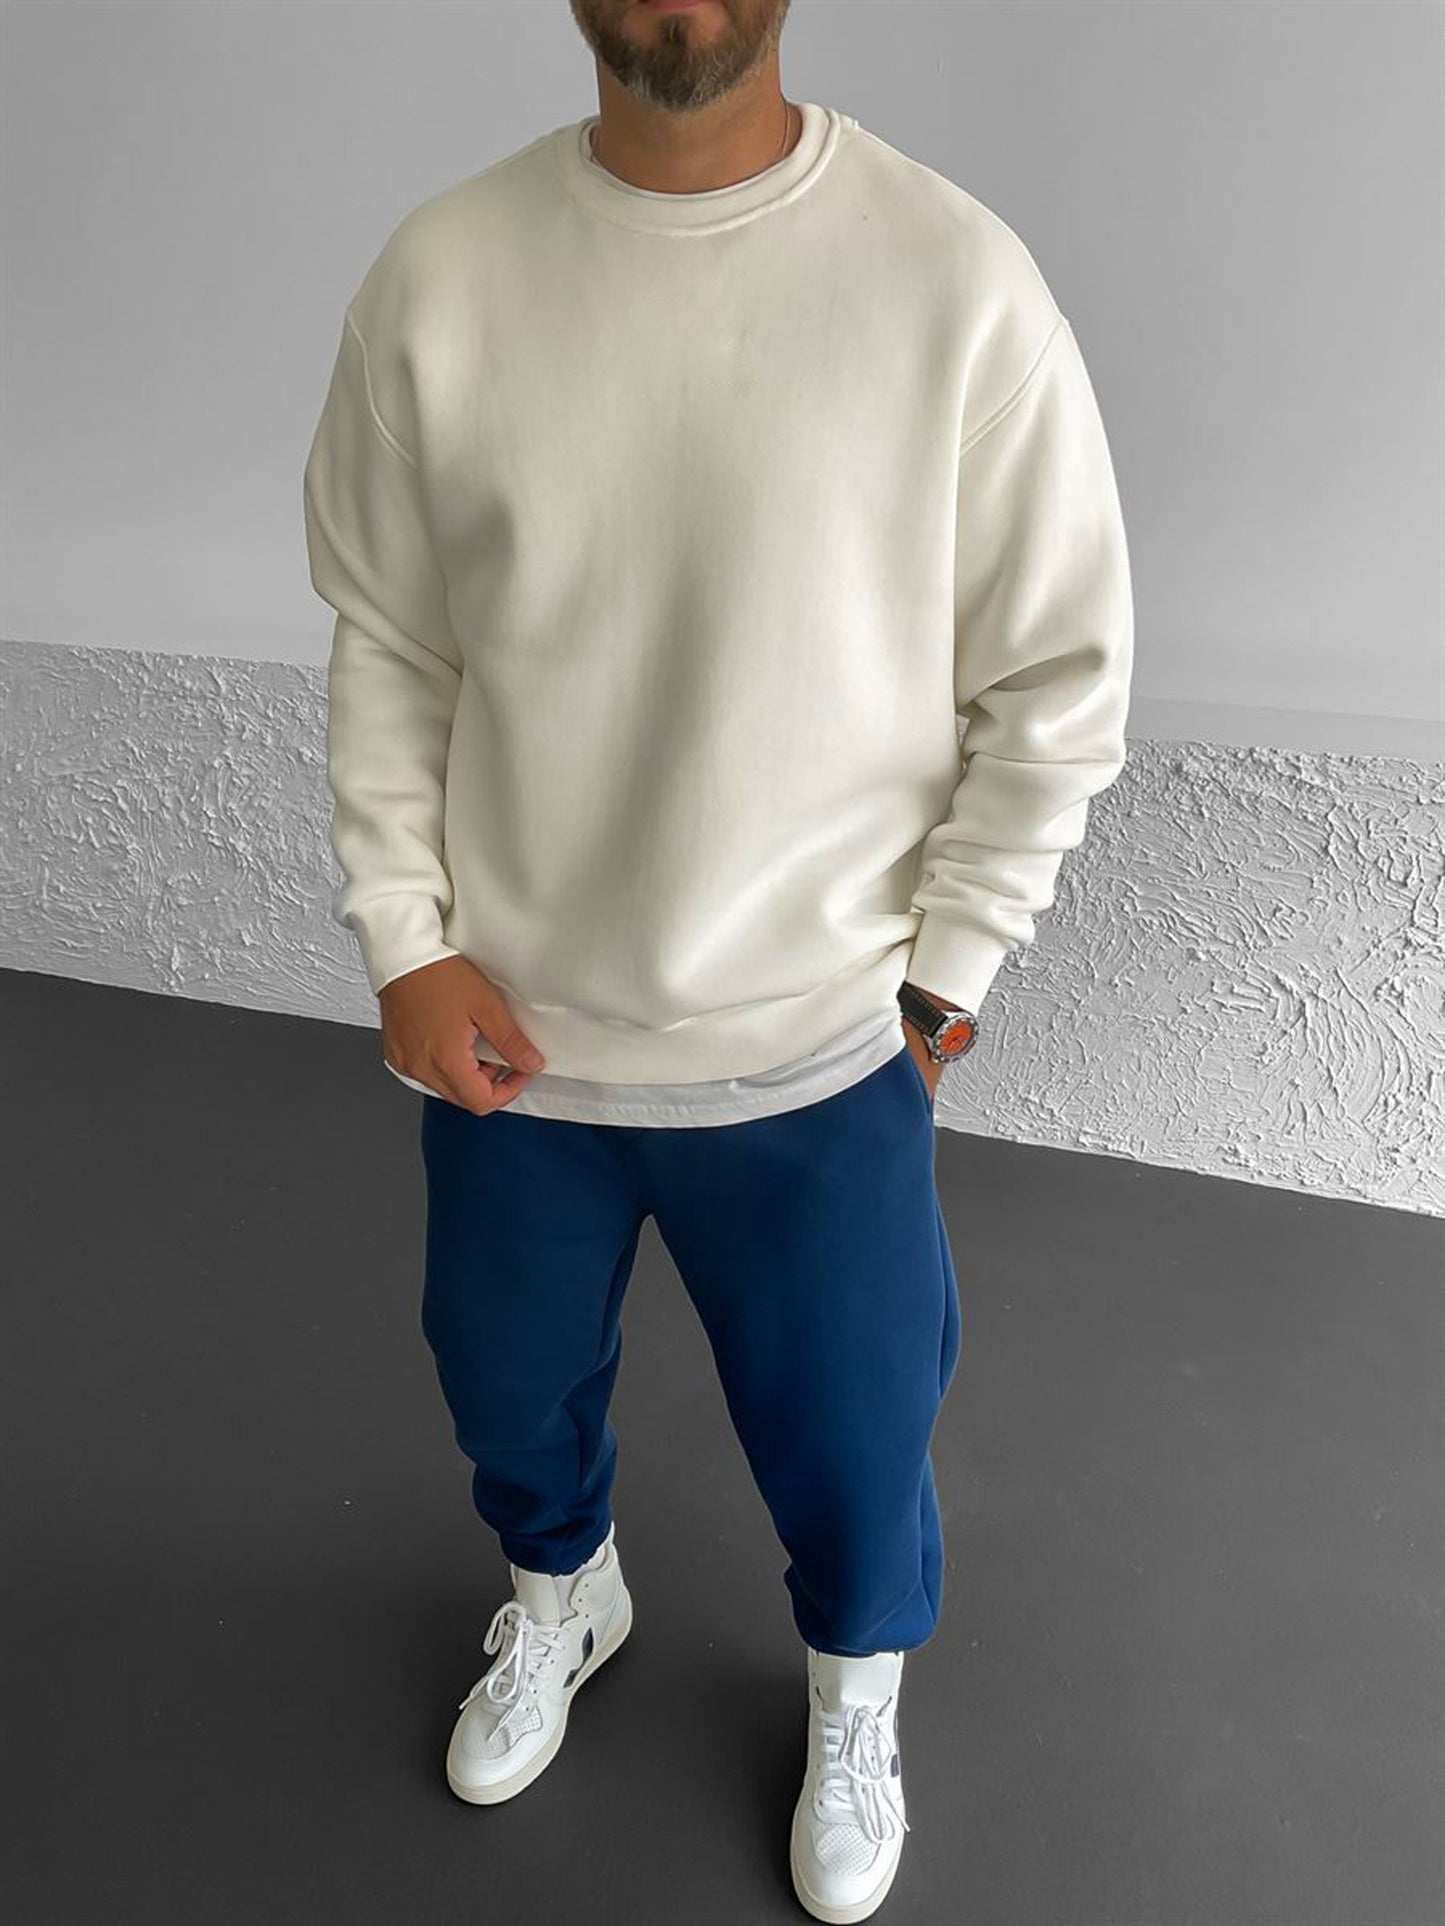 Off-White "What" Printed Oversize Sweatshirt